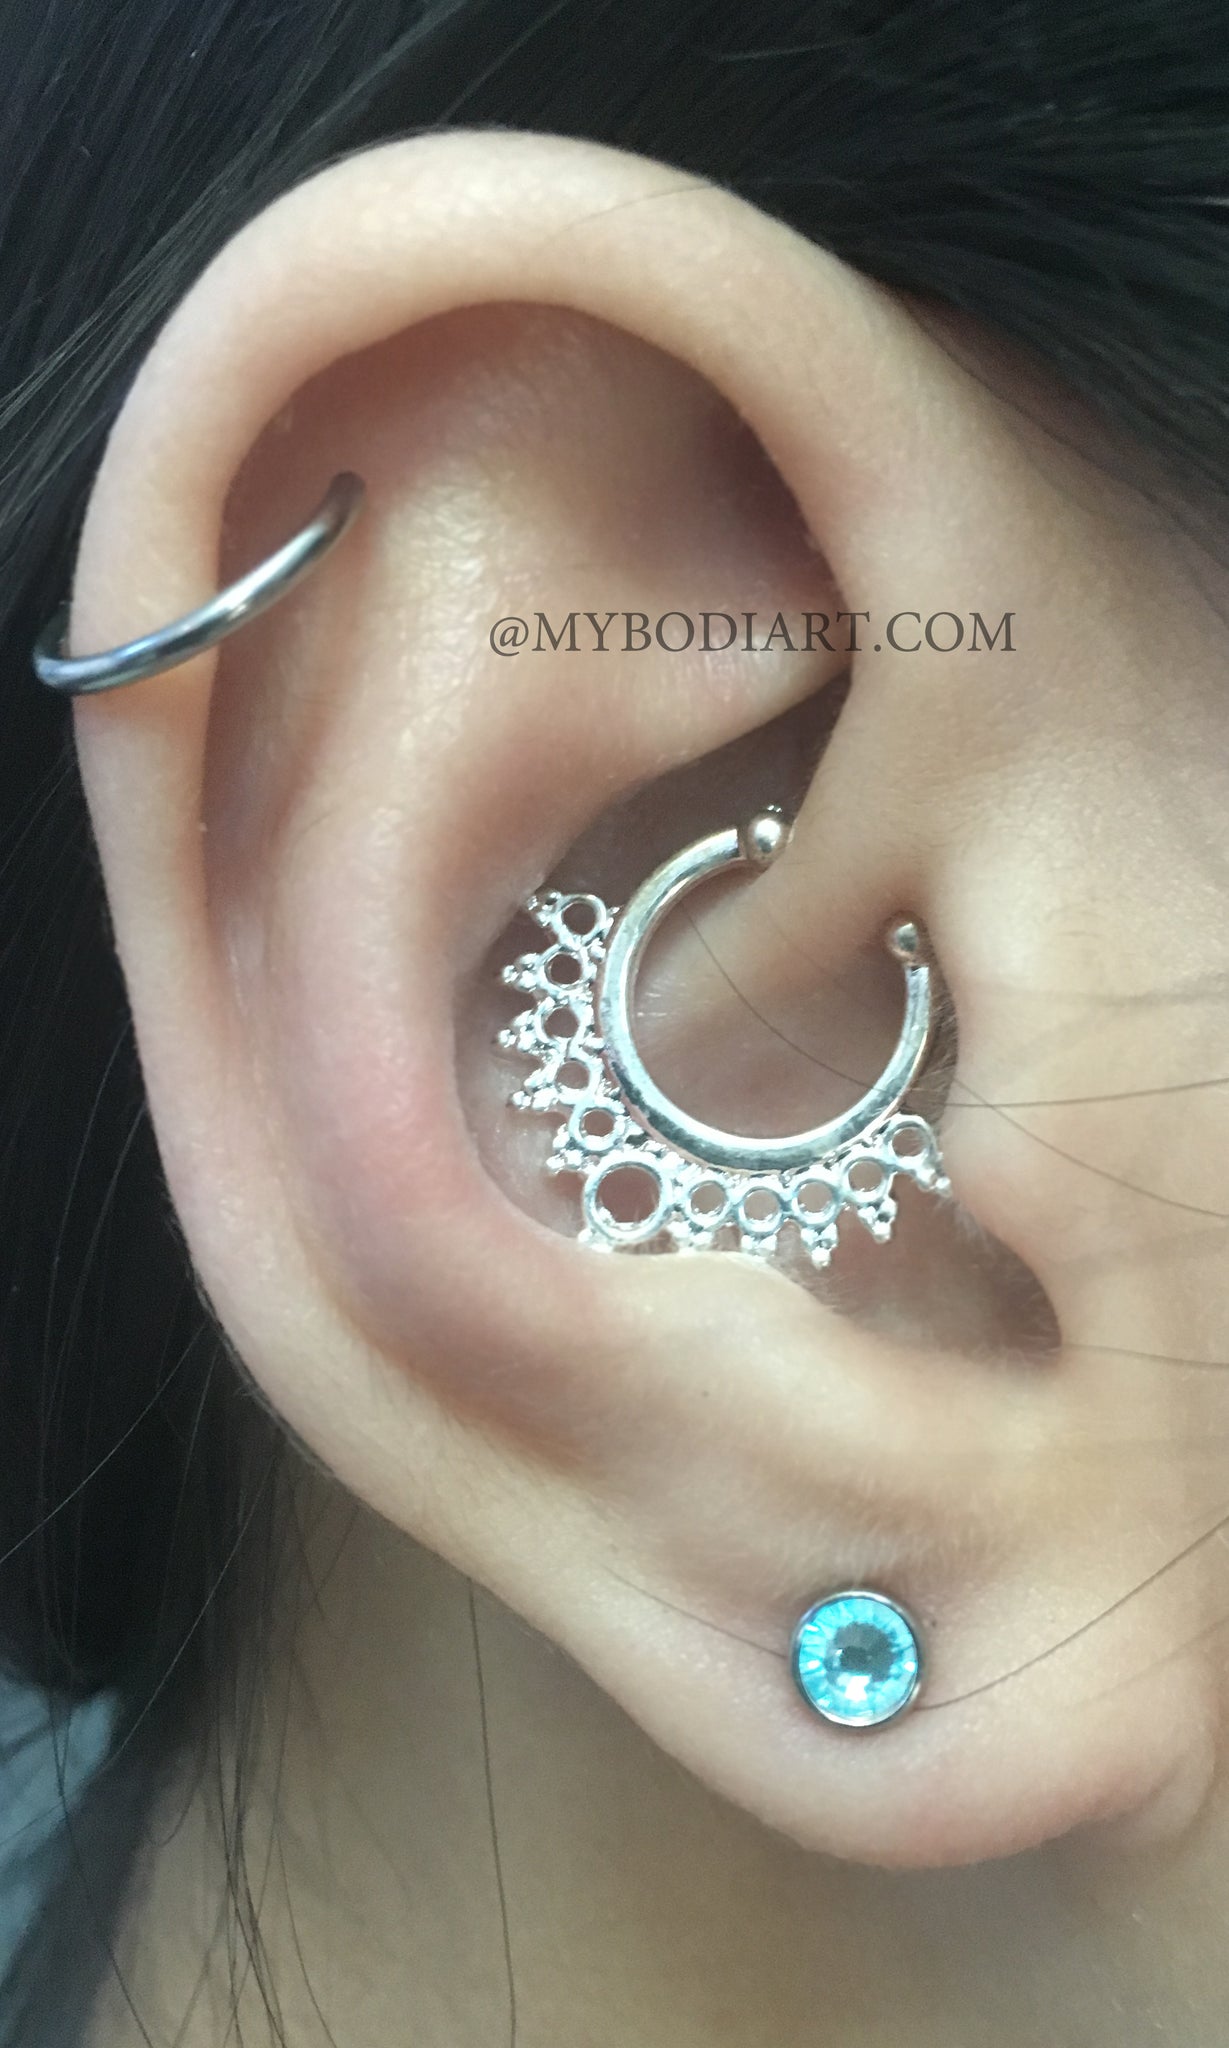 Pinterest Original Ear Piercing Ideas Cartilage Earring Ring Hoop Blue Crystal Lobe Stud - www.MyBoduArt.com